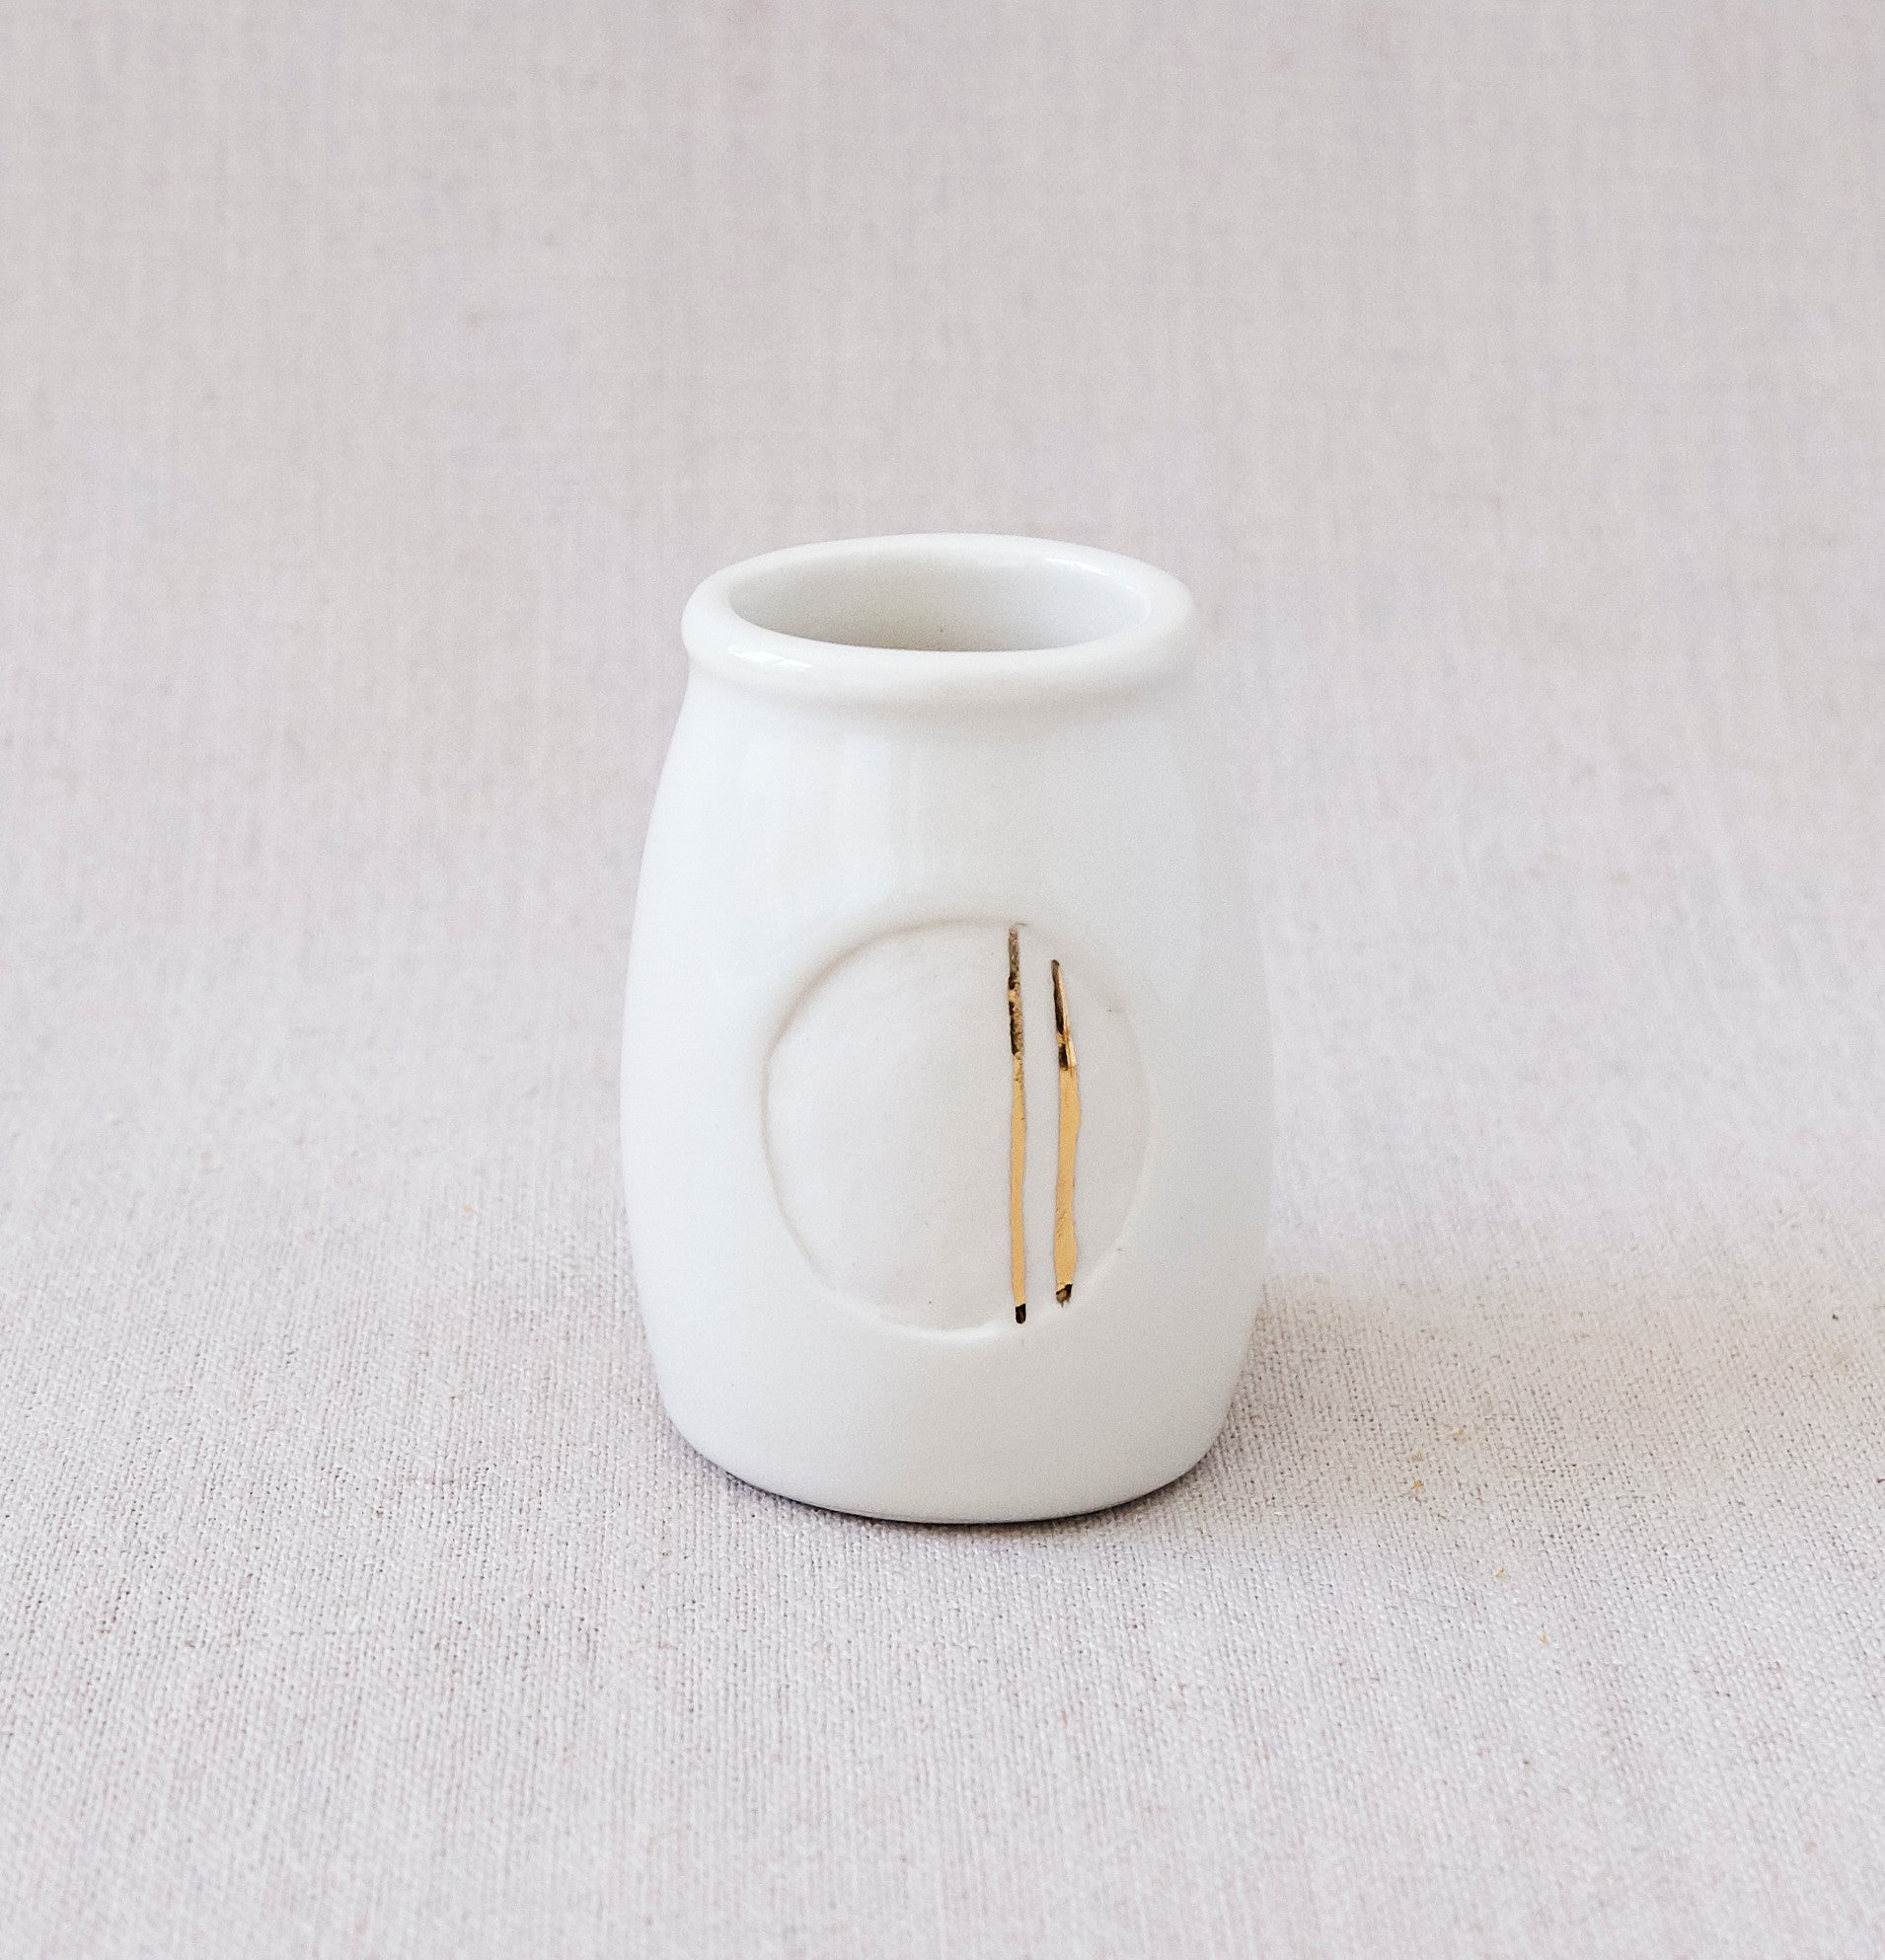 The Milk Jar Vase